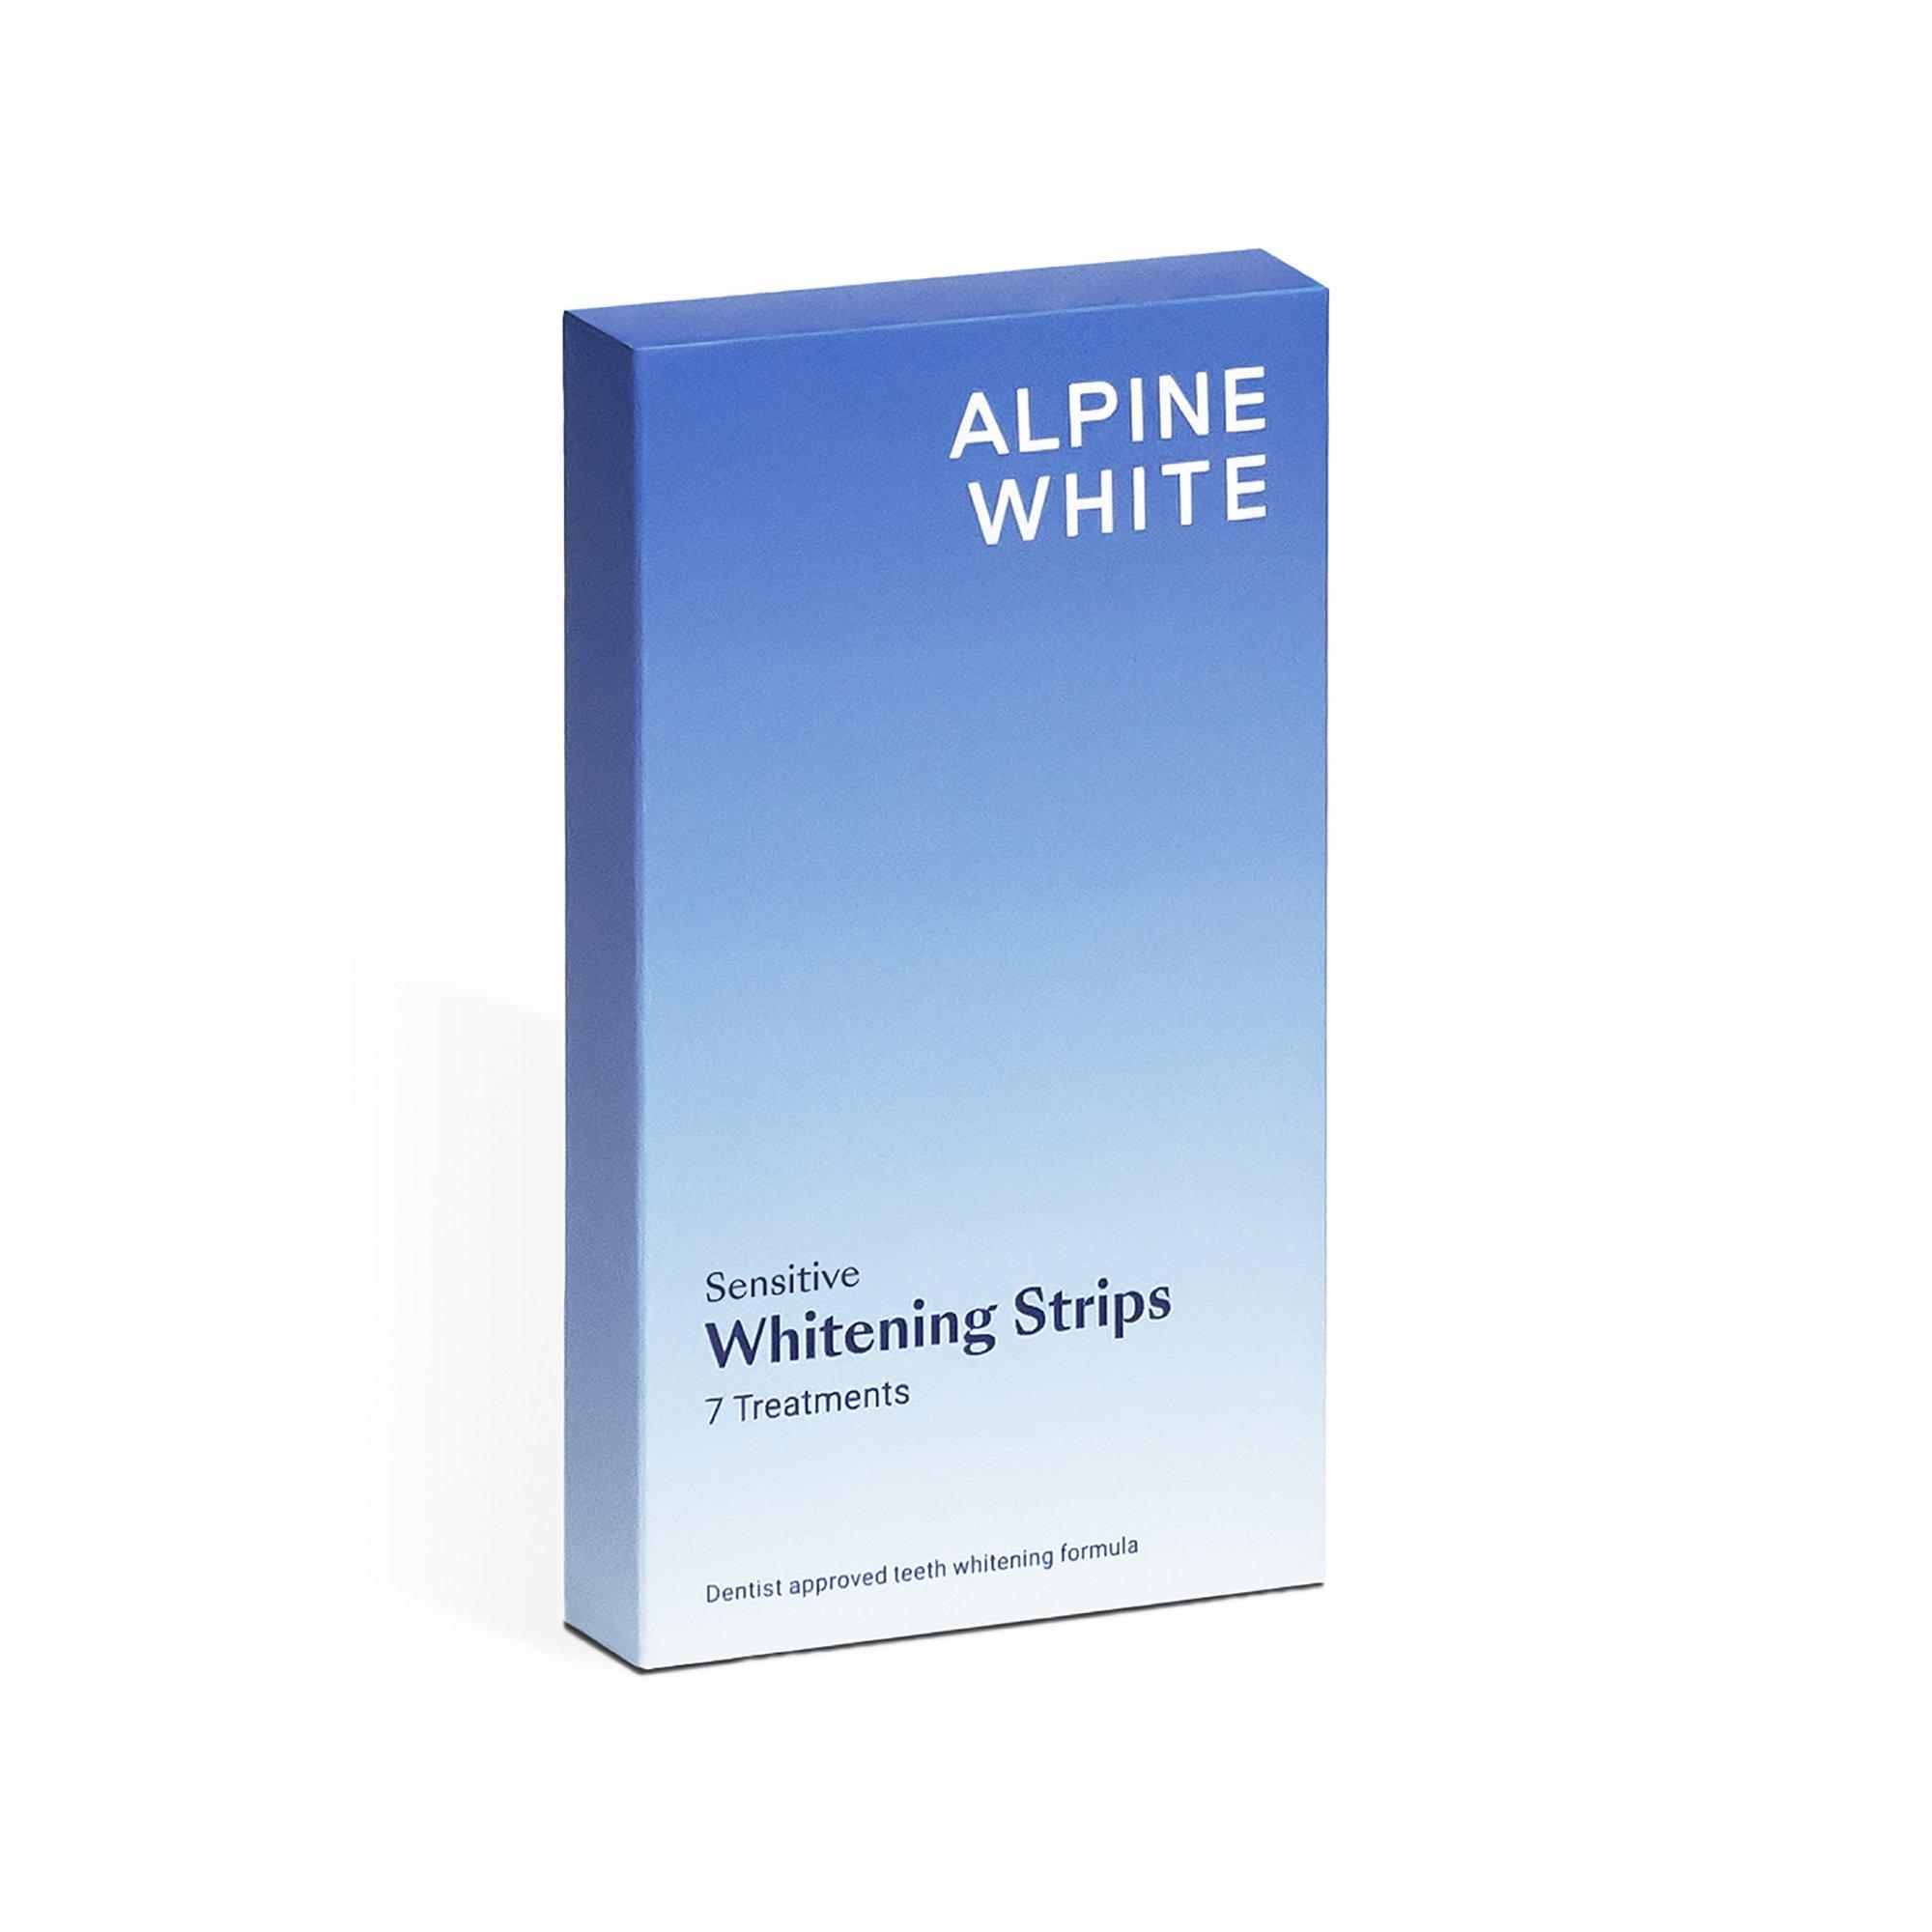 ALPINE WHITE Whitening Strips Sensitive Whitening Strips Sensitive 